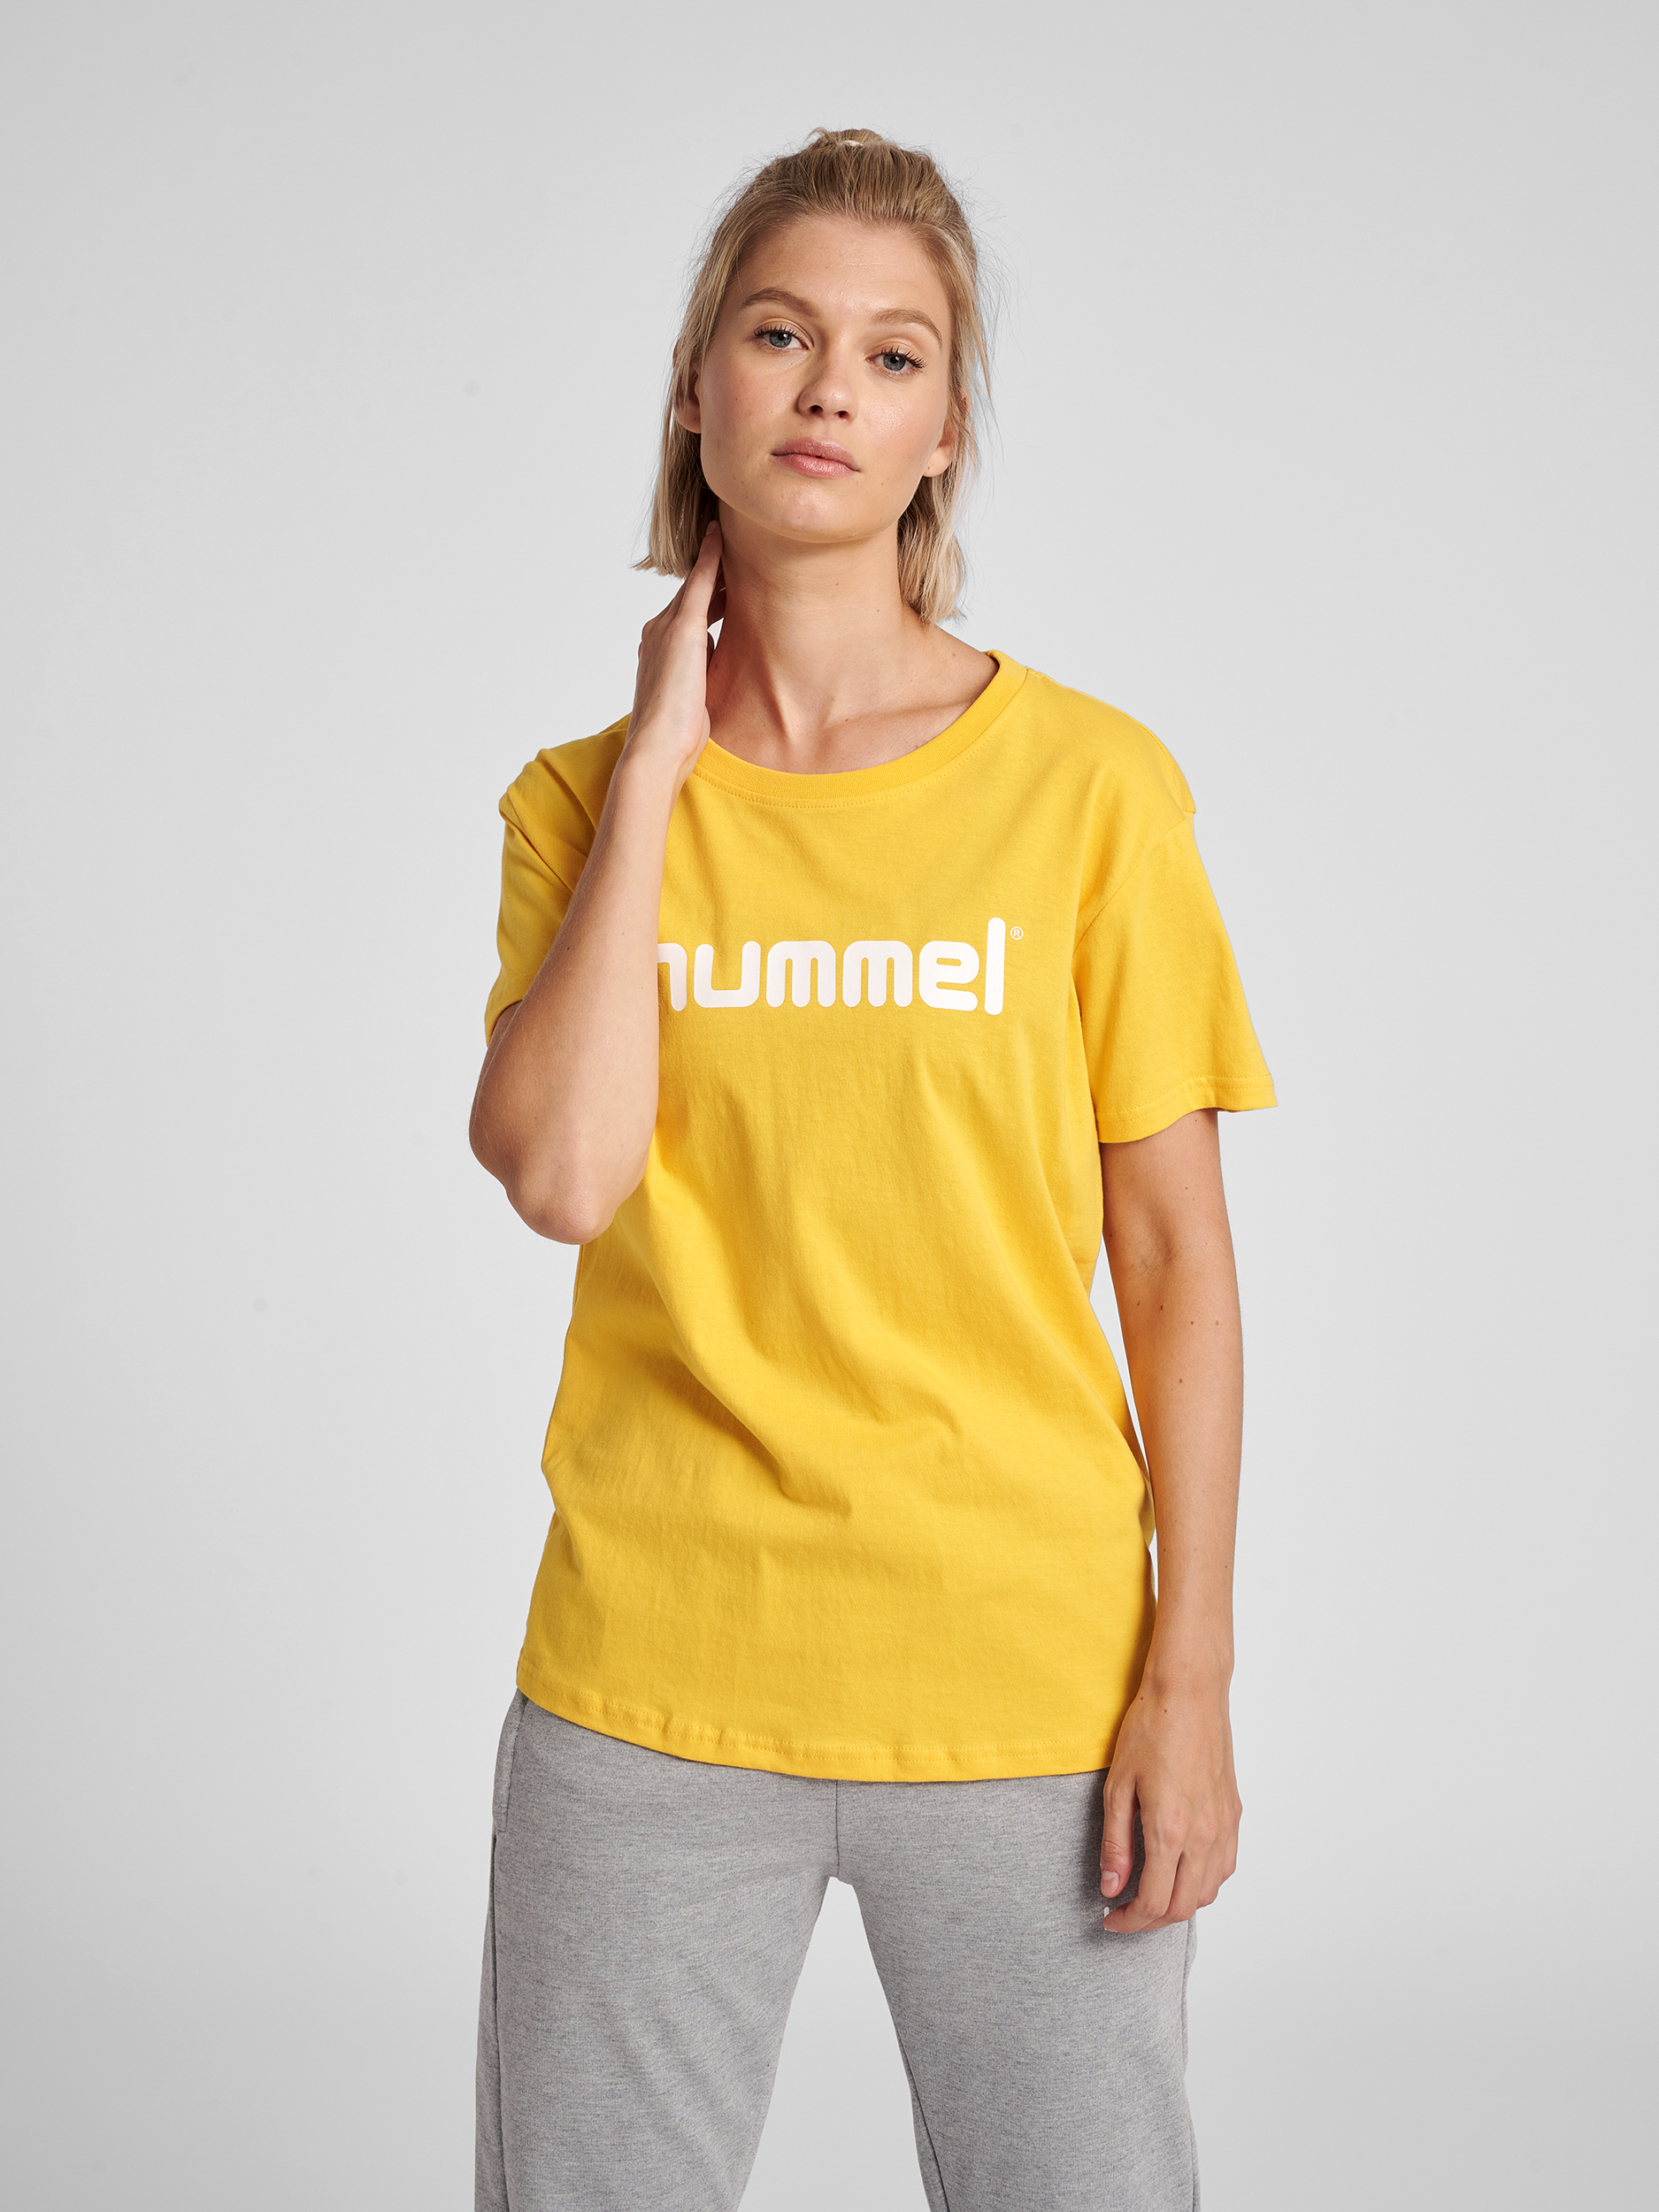 Hummel Womens Ladies Sport Training Casual Cotton Short Sleeve SS T-Shirt Tee 